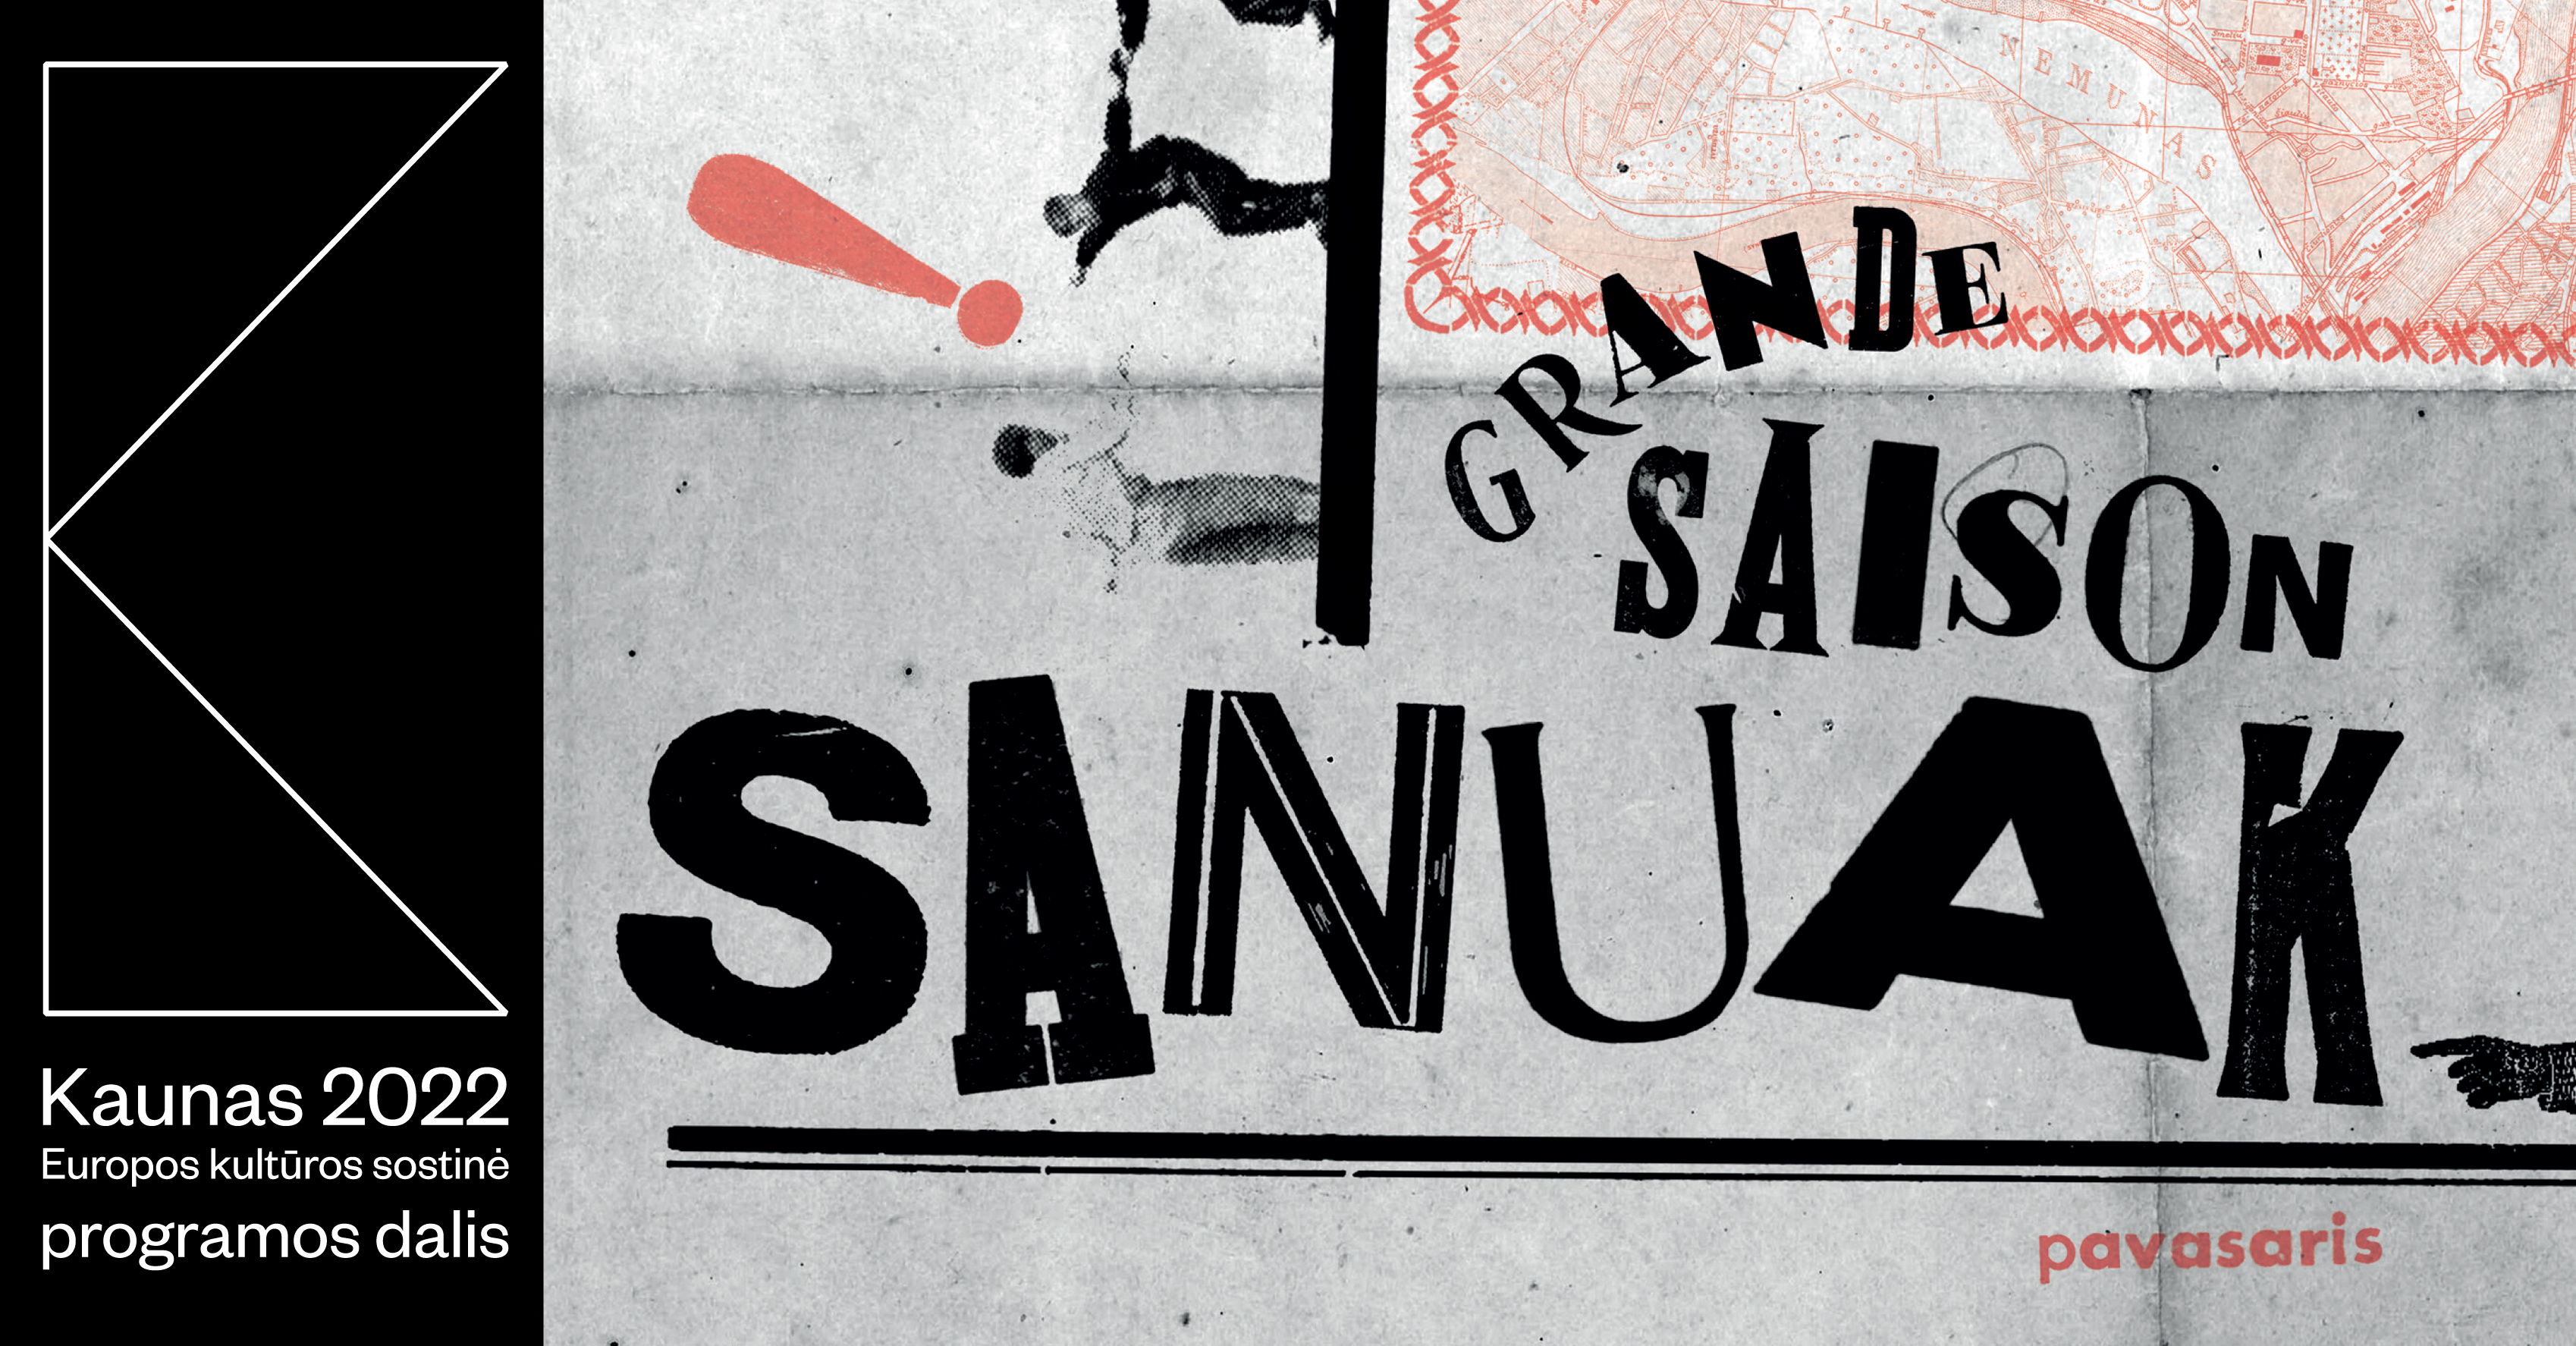 Grande Saison SanuaK - - - III